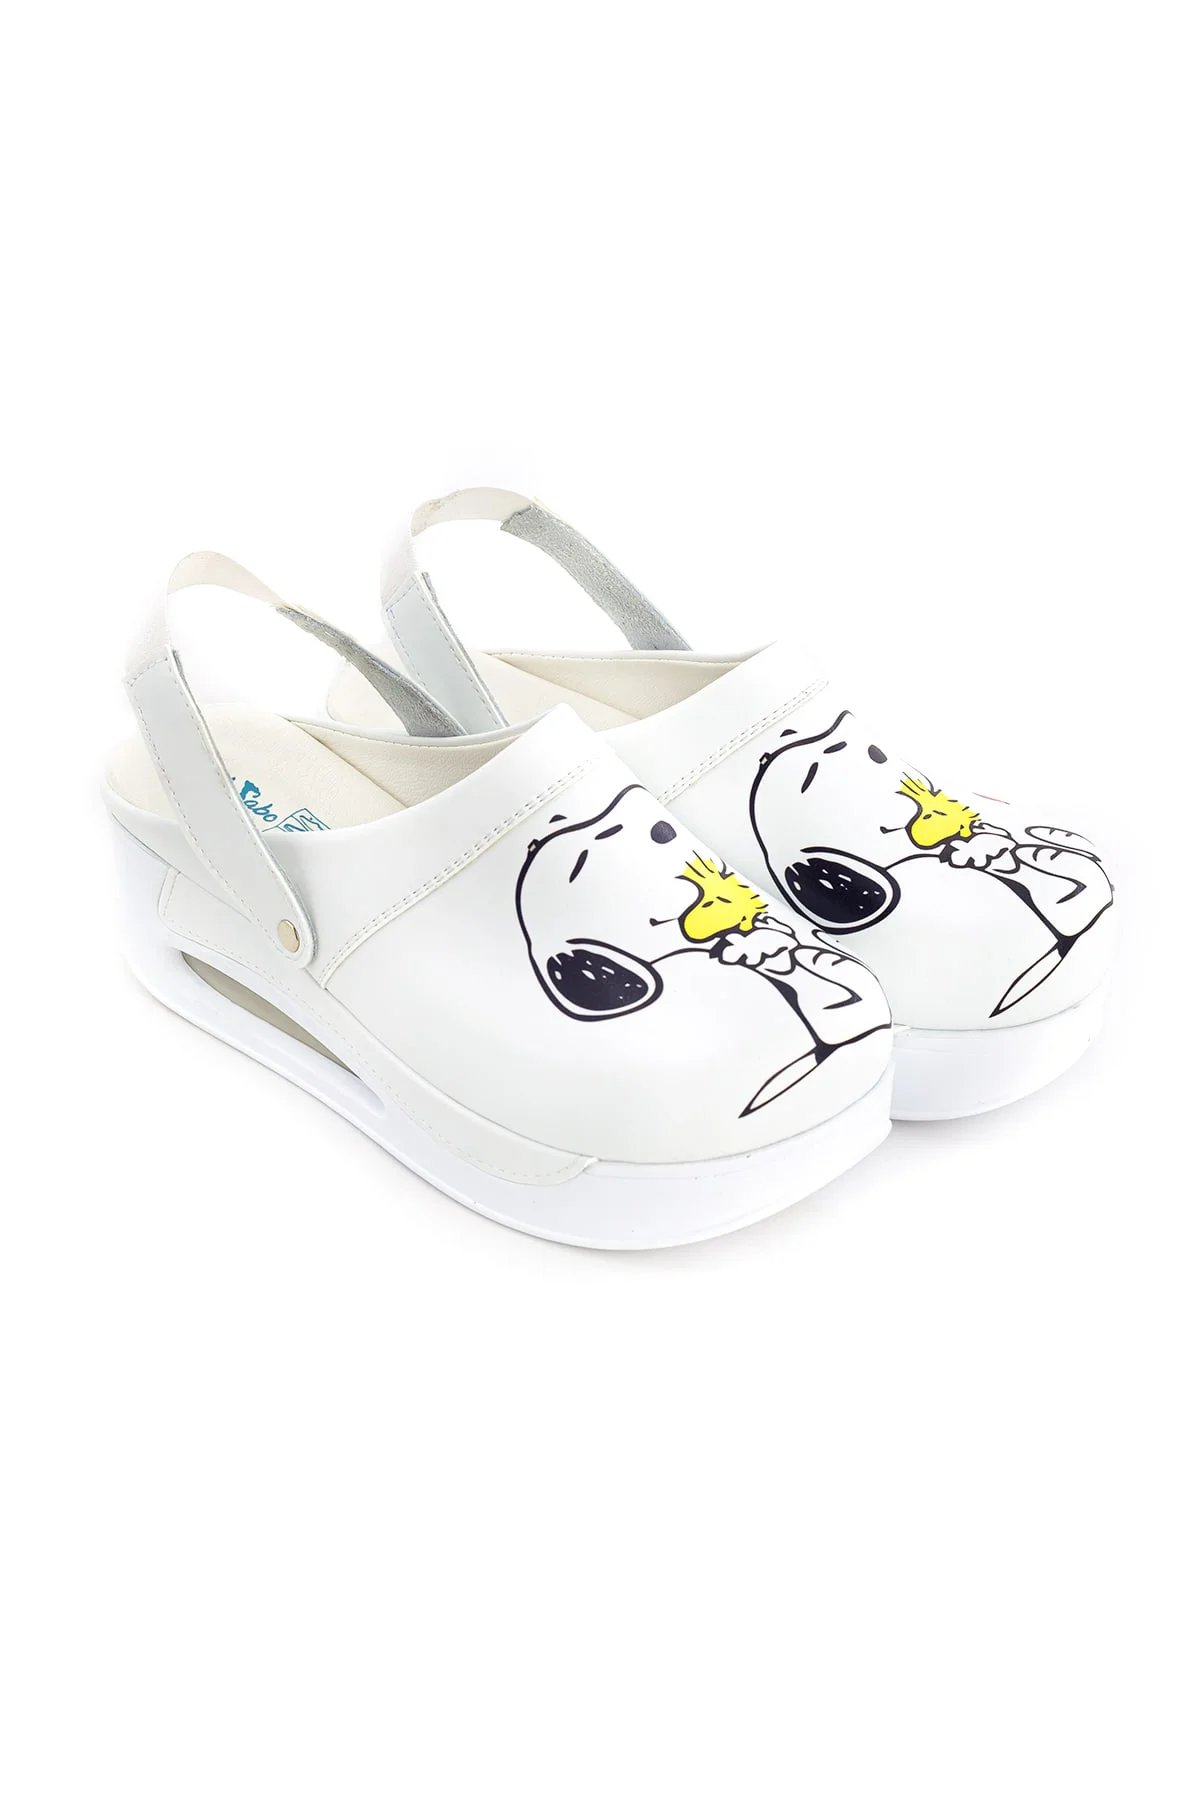 Terlik barevné a zdravotni AIR obuv – pantofle Snoopy Obuv podle profese air nazouvaky 3